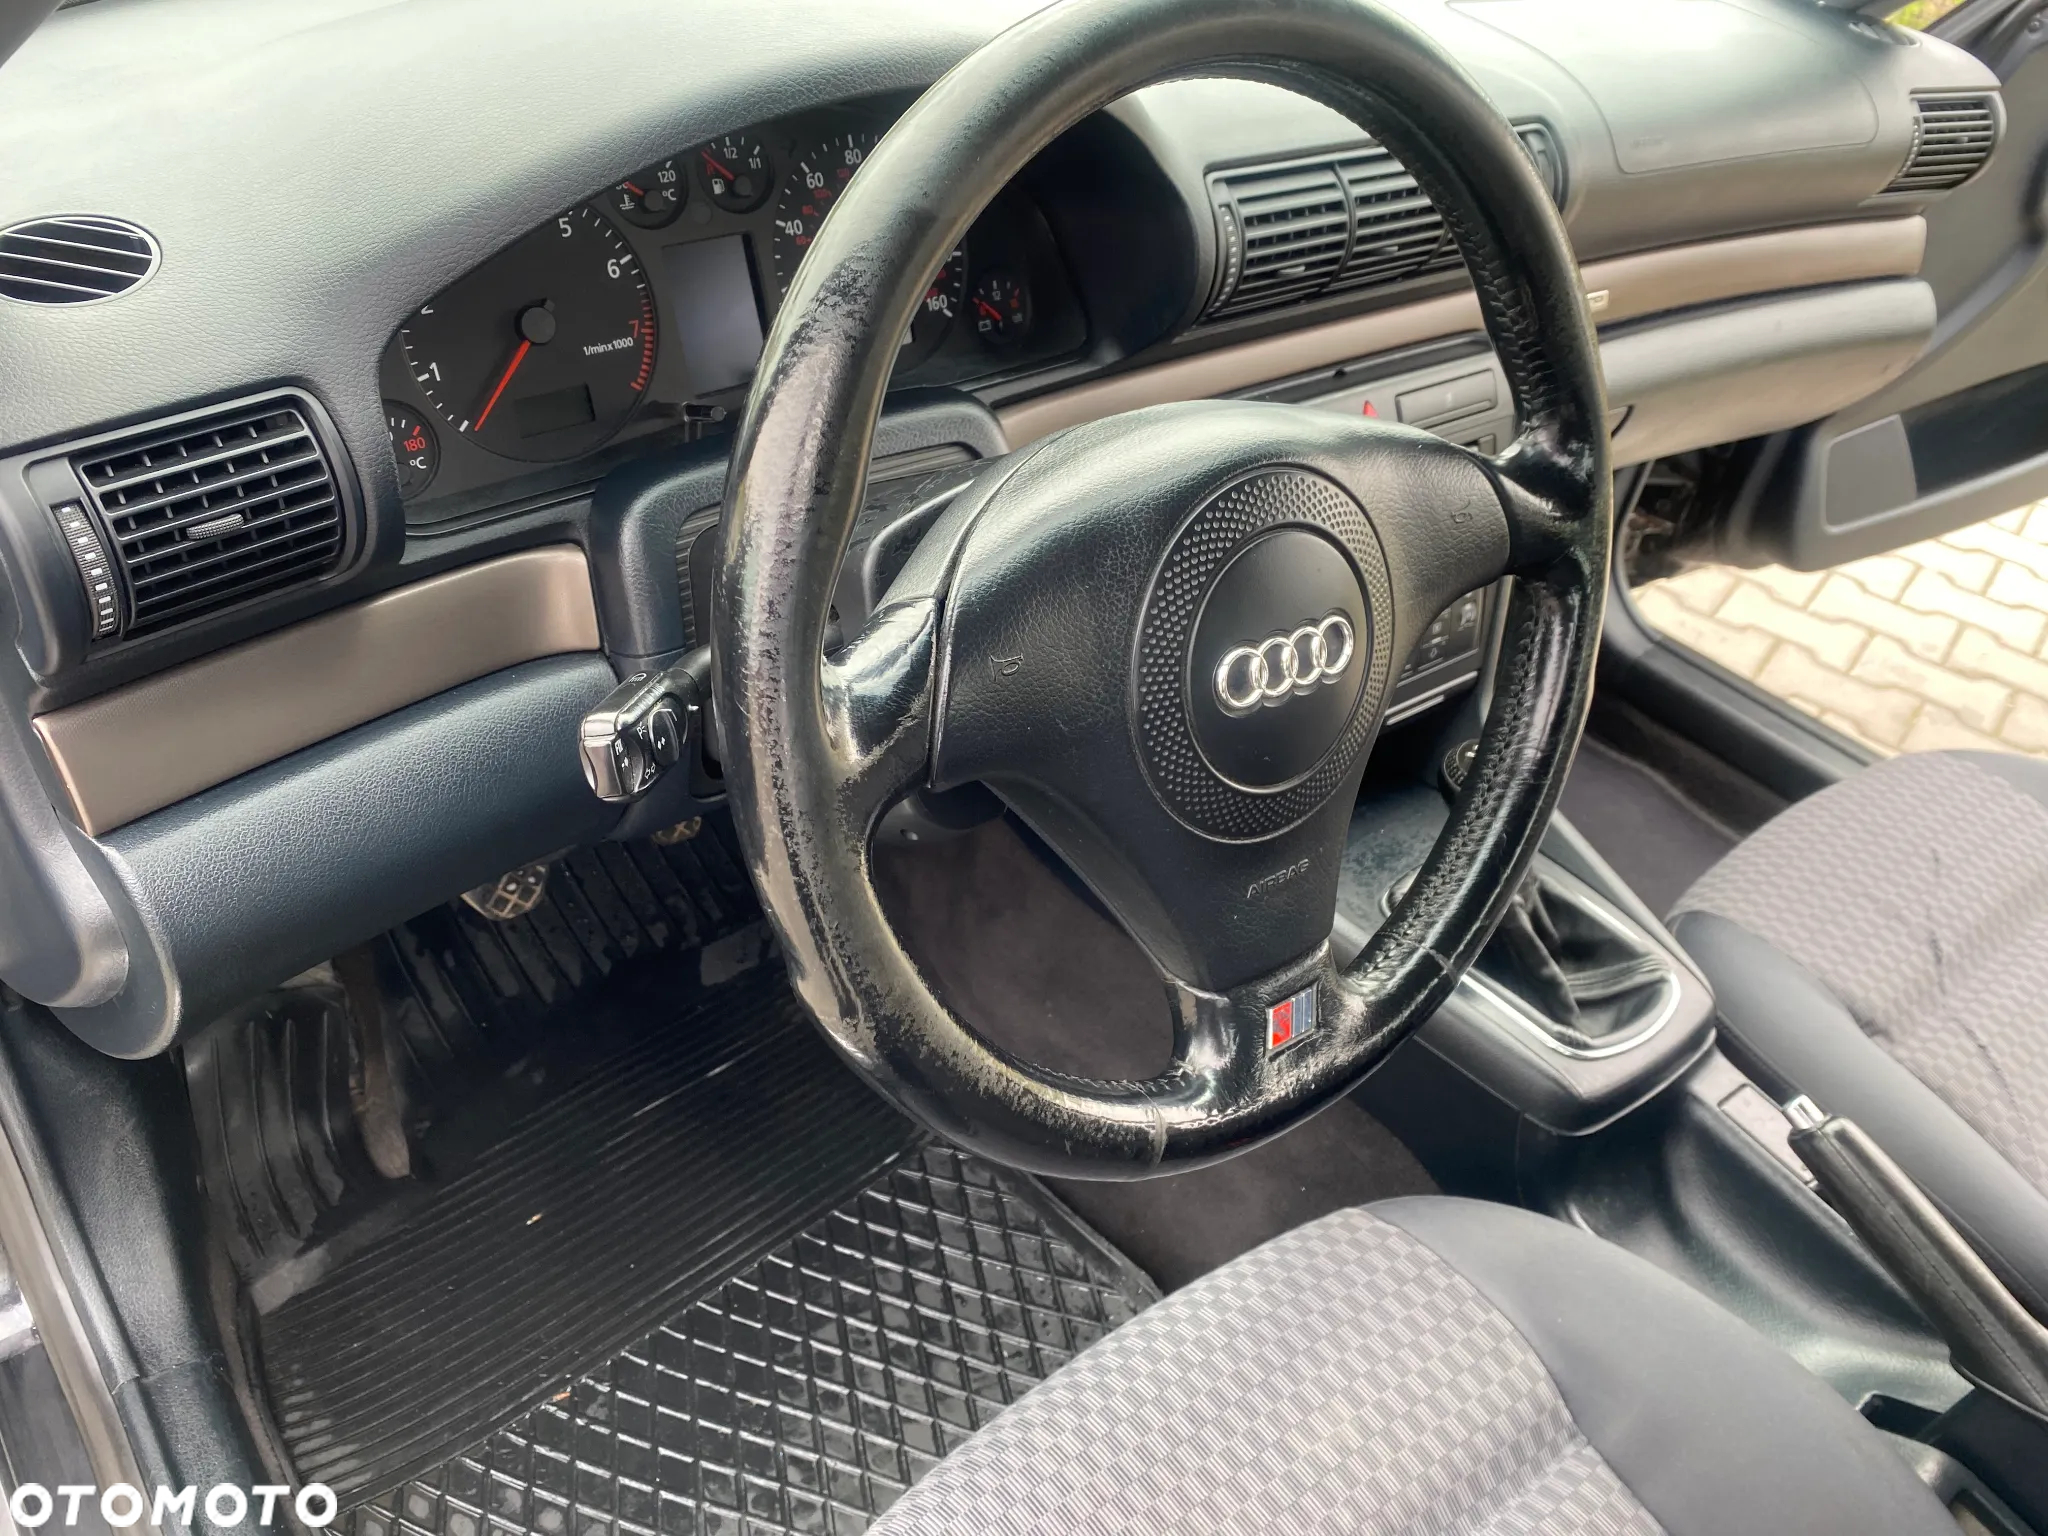 Audi A4 Avant 1.8T Quattro - 7